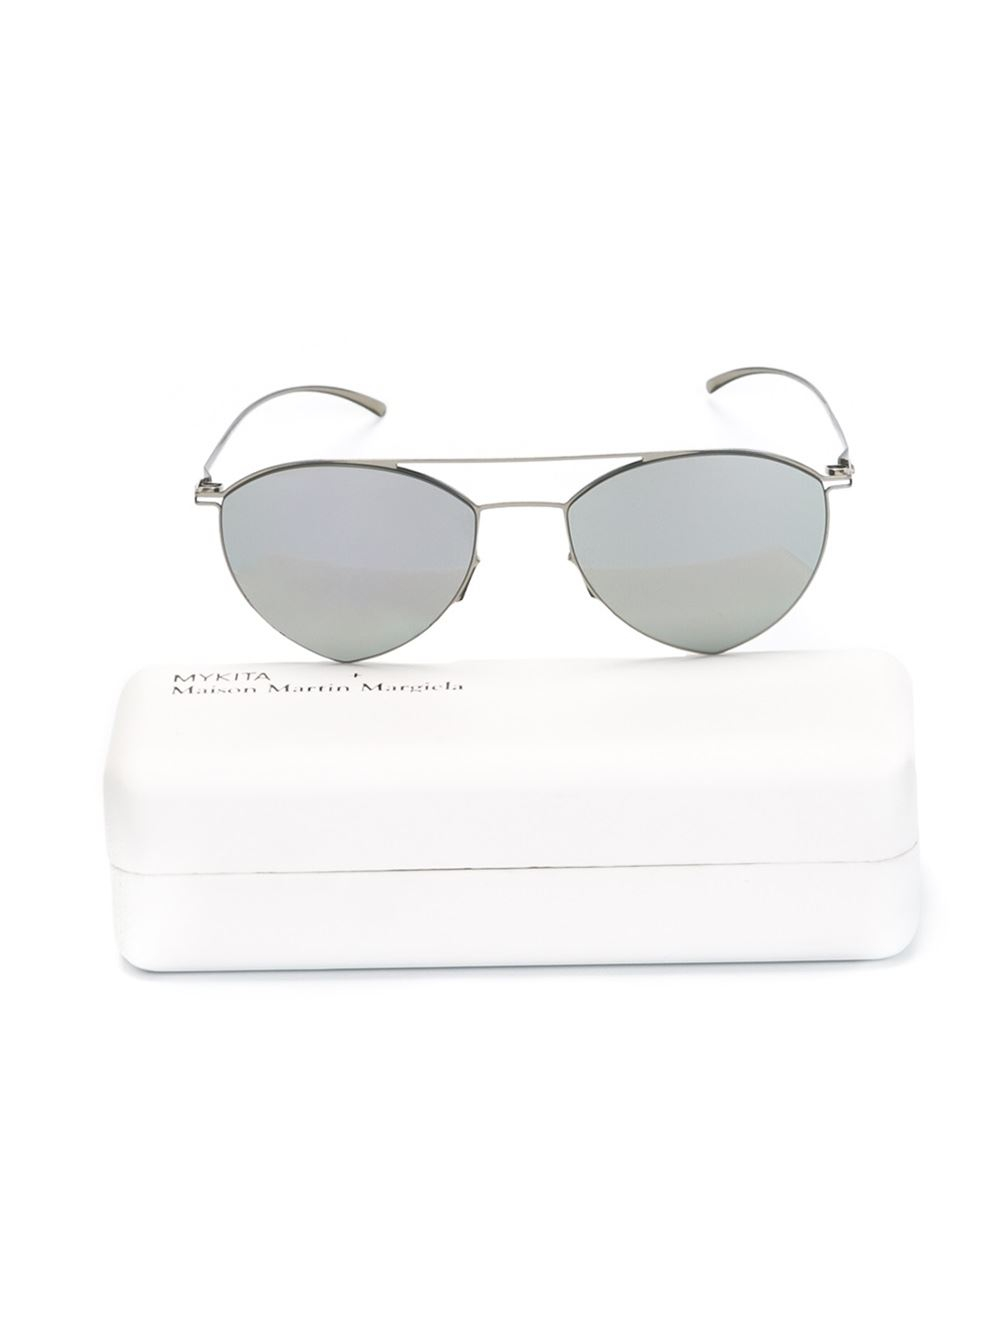 Mykita Maison Martin Margiela X 'Mmesse010' Sunglasses in Metallic 